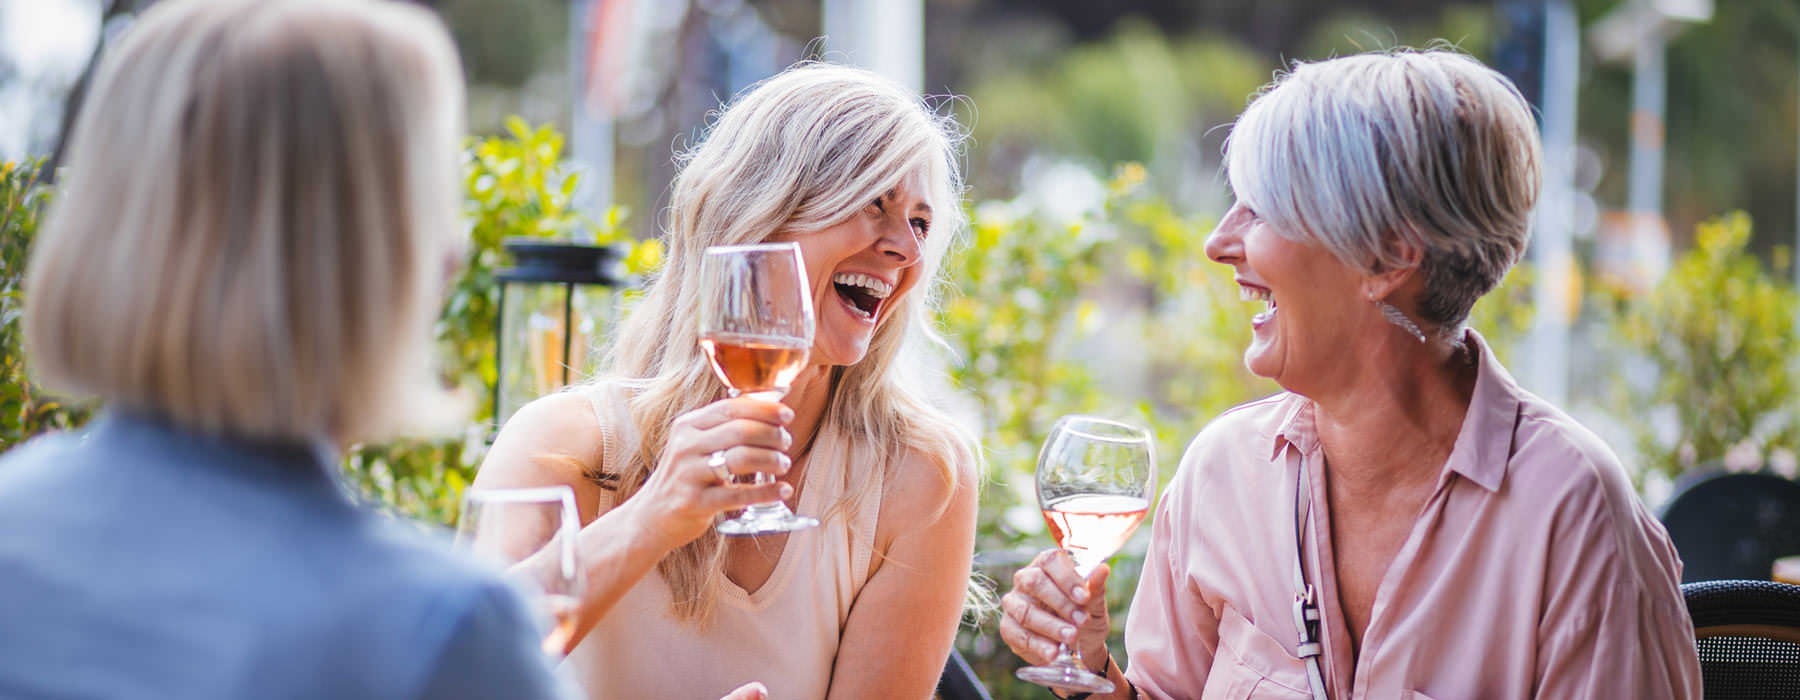 women raise glasses of wine outdoors